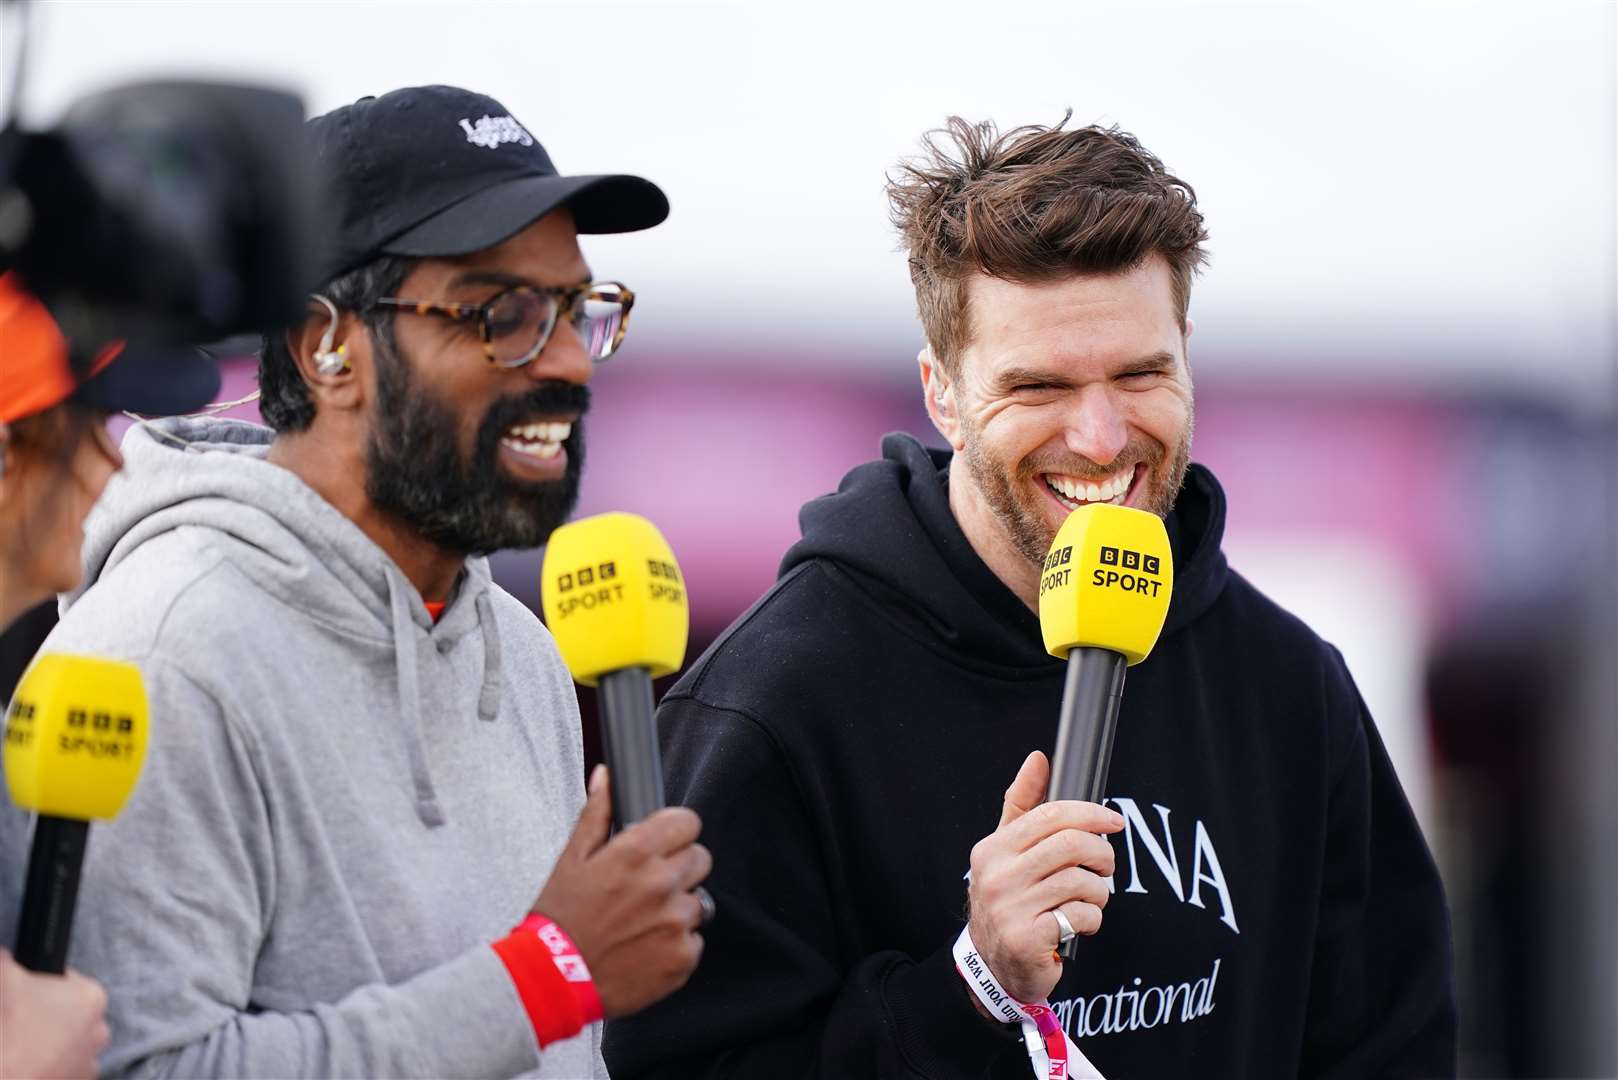 Romesh Ranganathan and Joel Dommett speak to BBC Sport during the TCS London Marathon (Zac Goodwin/PA)